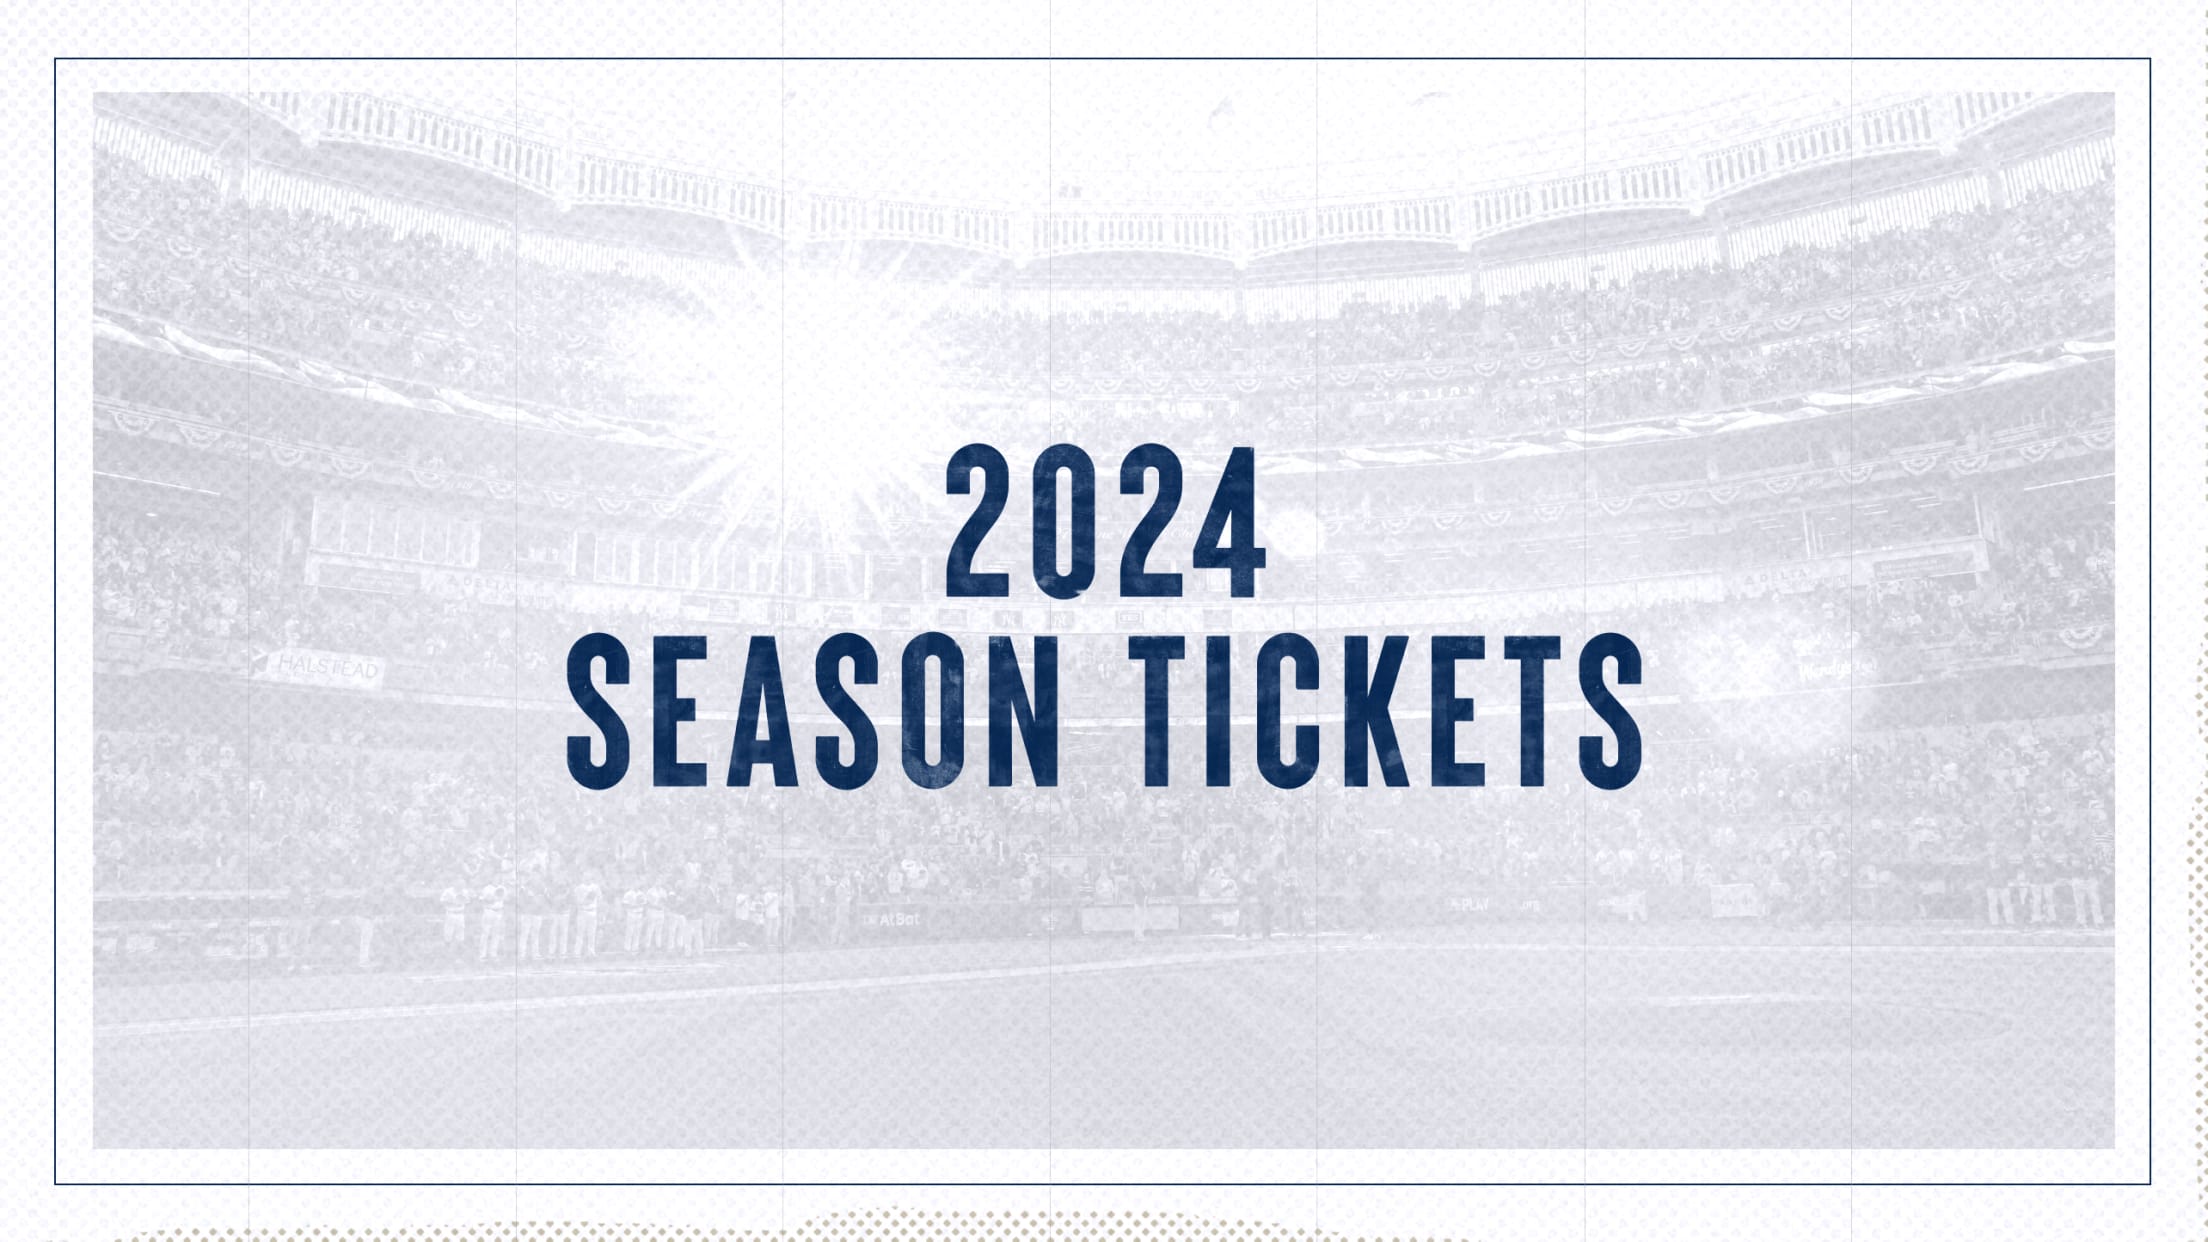 Yankees open 2024 season in Houston